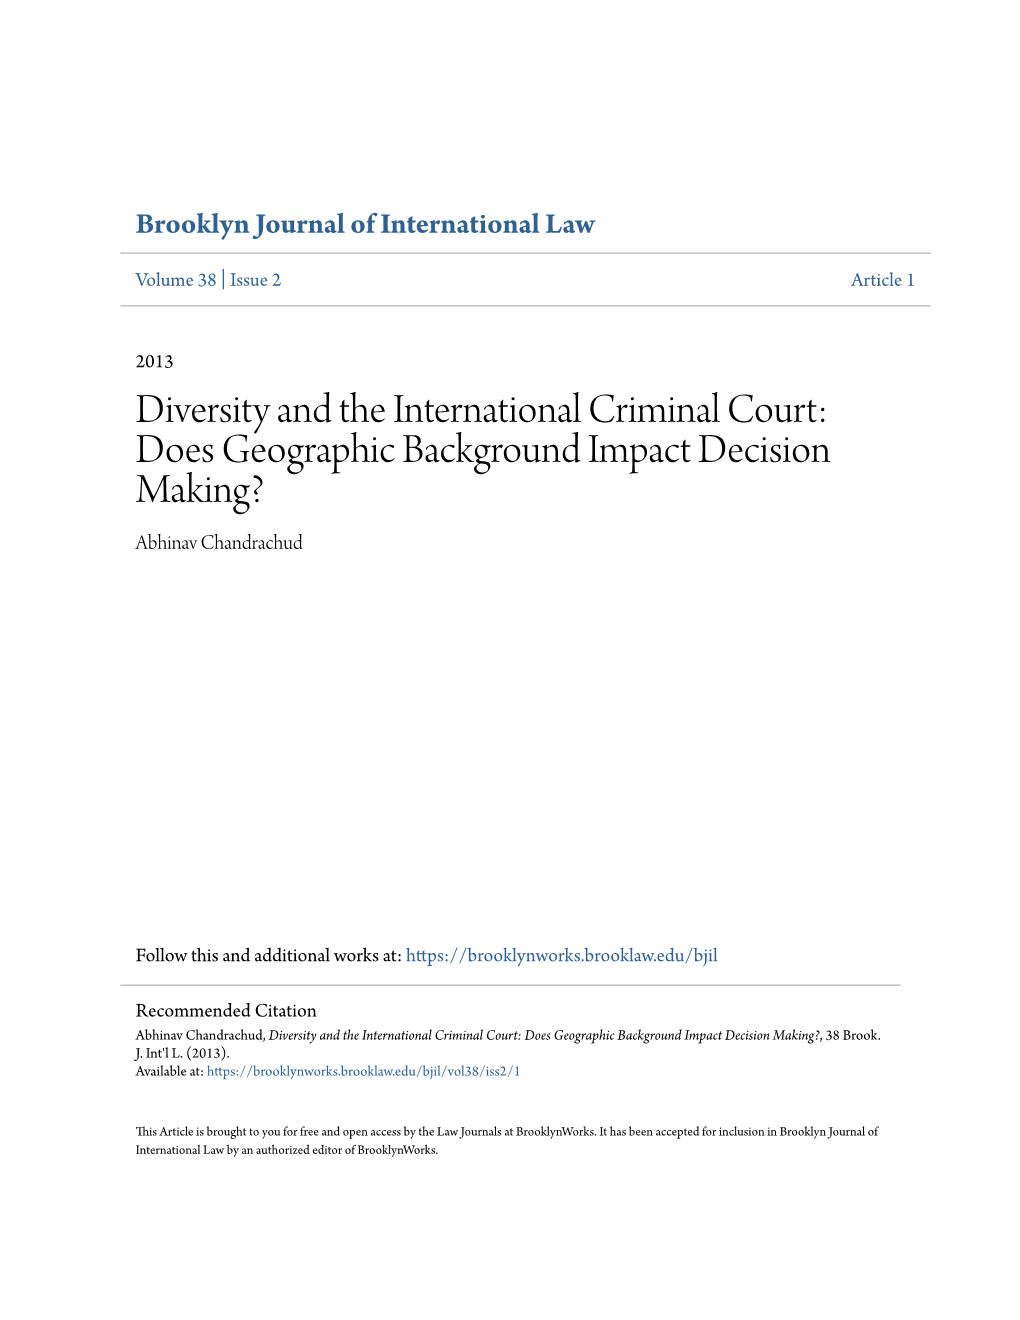 Diversity and the International Criminal Court: Does Geographic Background Impact Decision Making? Abhinav Chandrachud